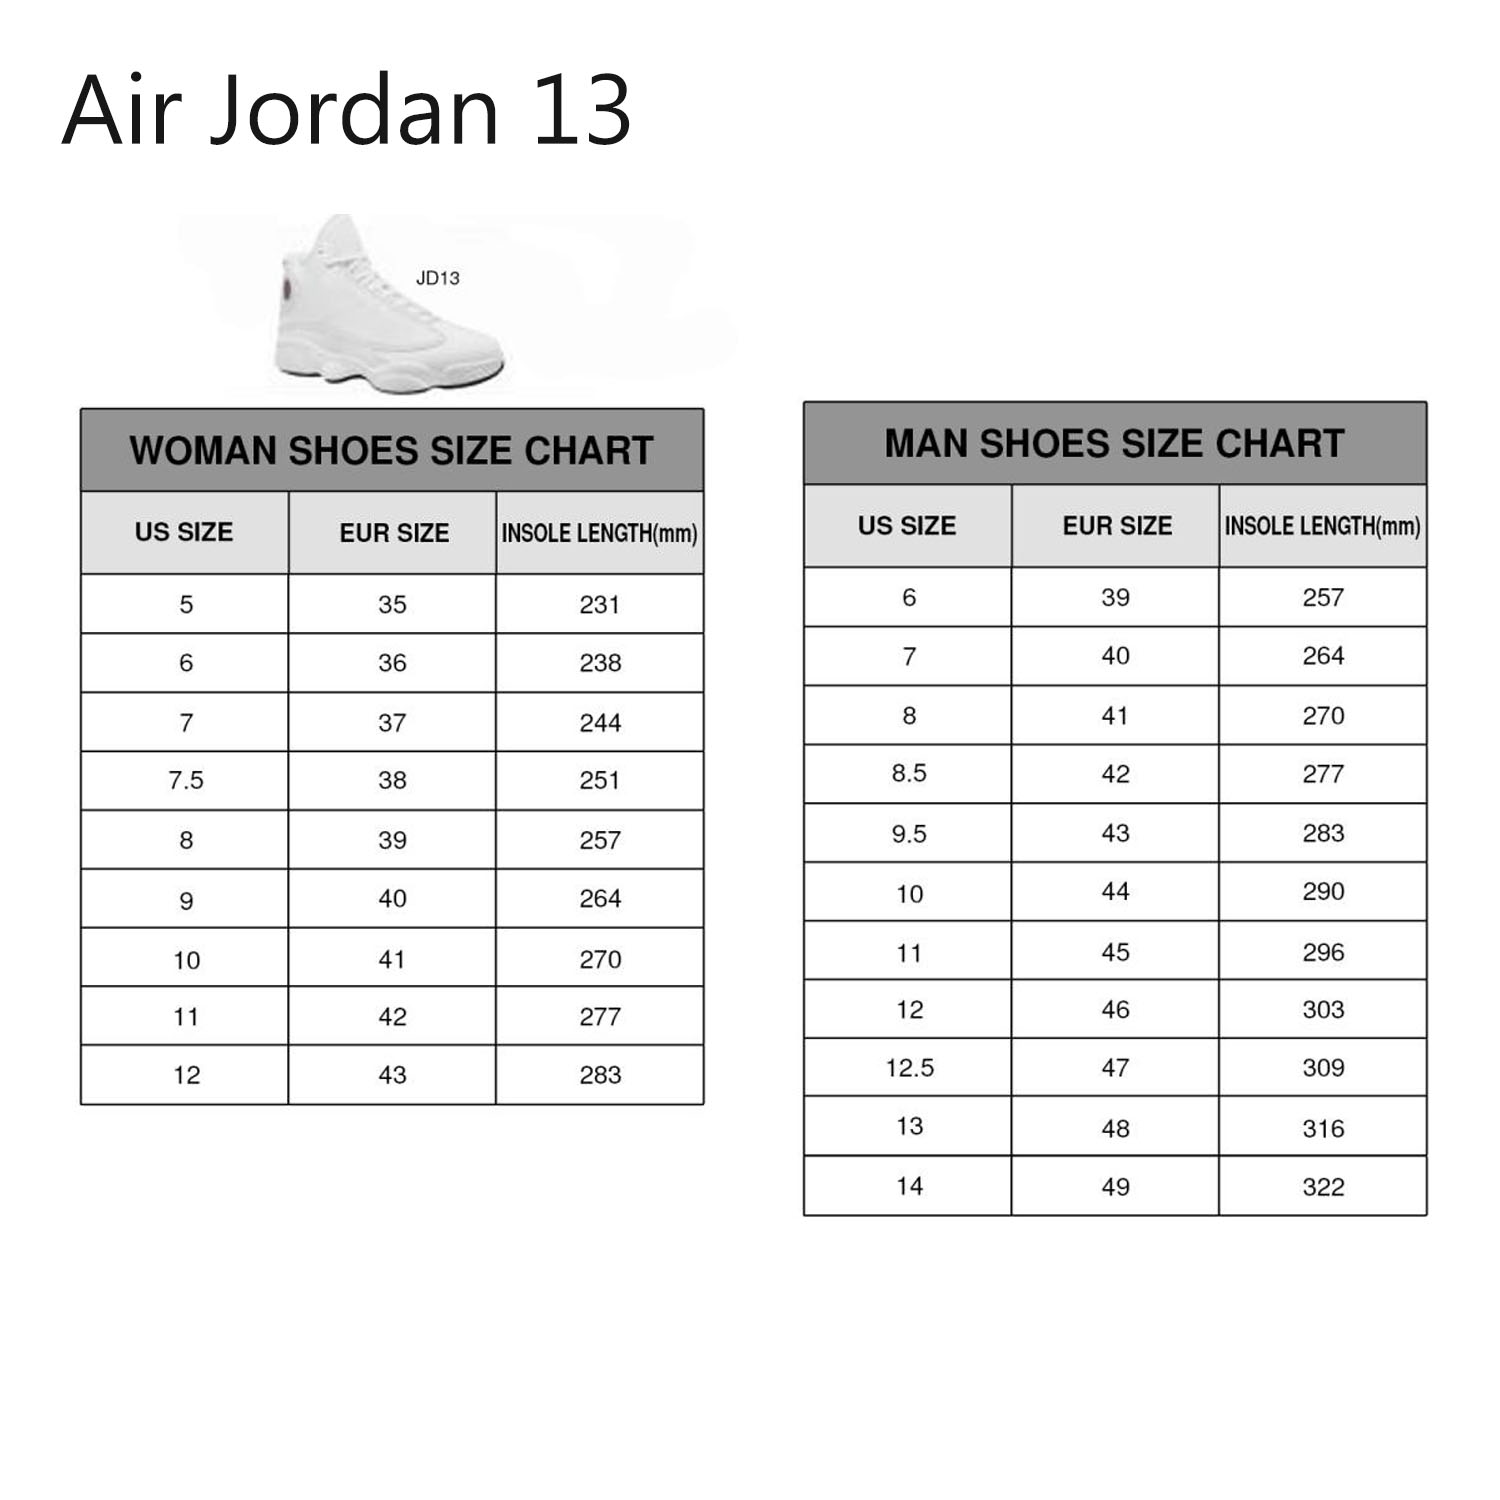 Air Jordan 13 Size Chartpx Baby Yoda Hug Pittsburgh Steelers Personalized Name Air Jordan 13 Shoes